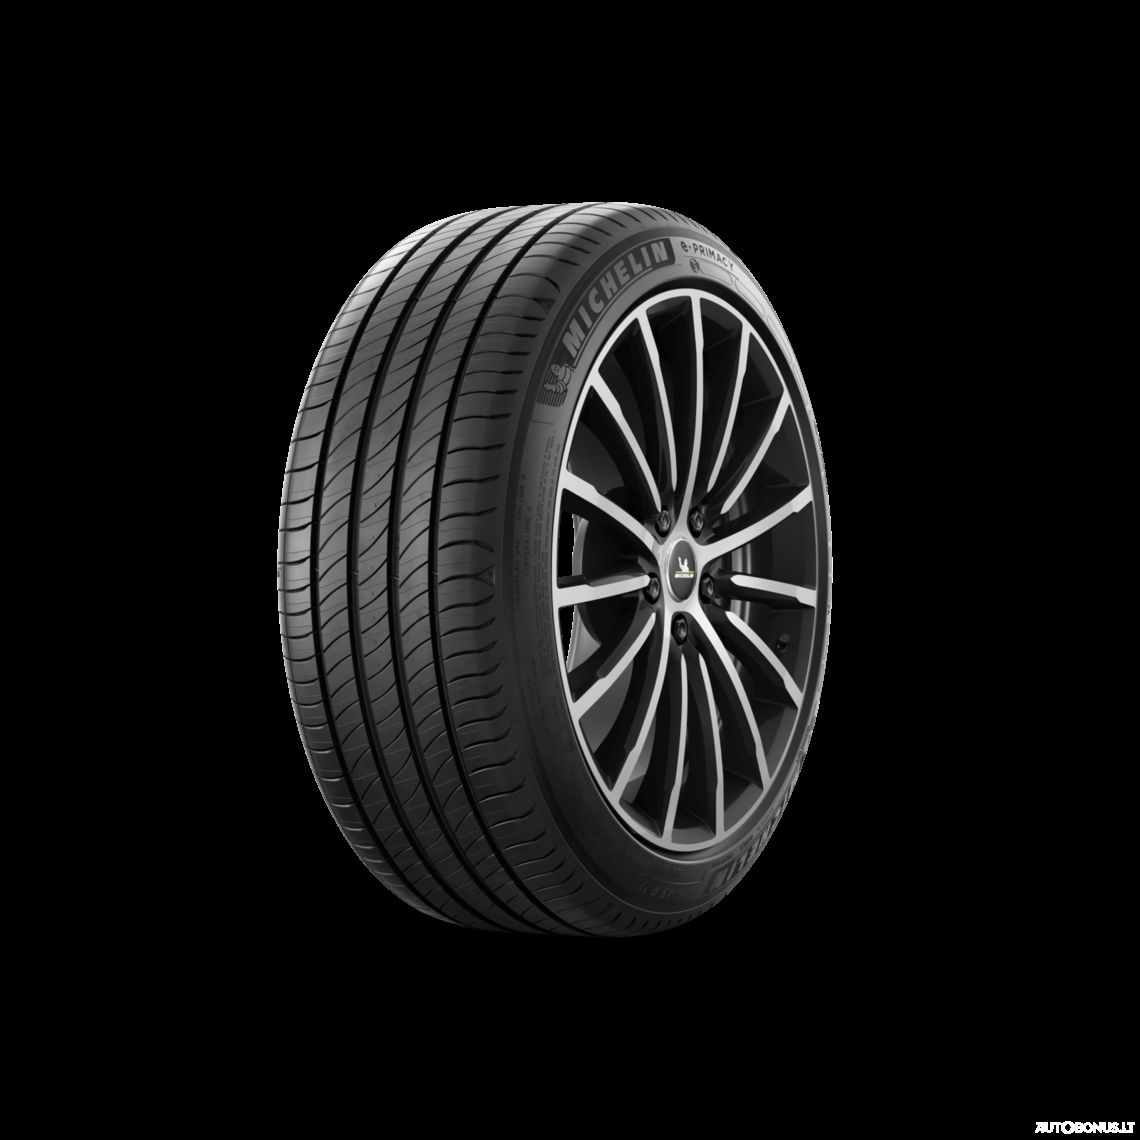 255/45R19 summer tyres